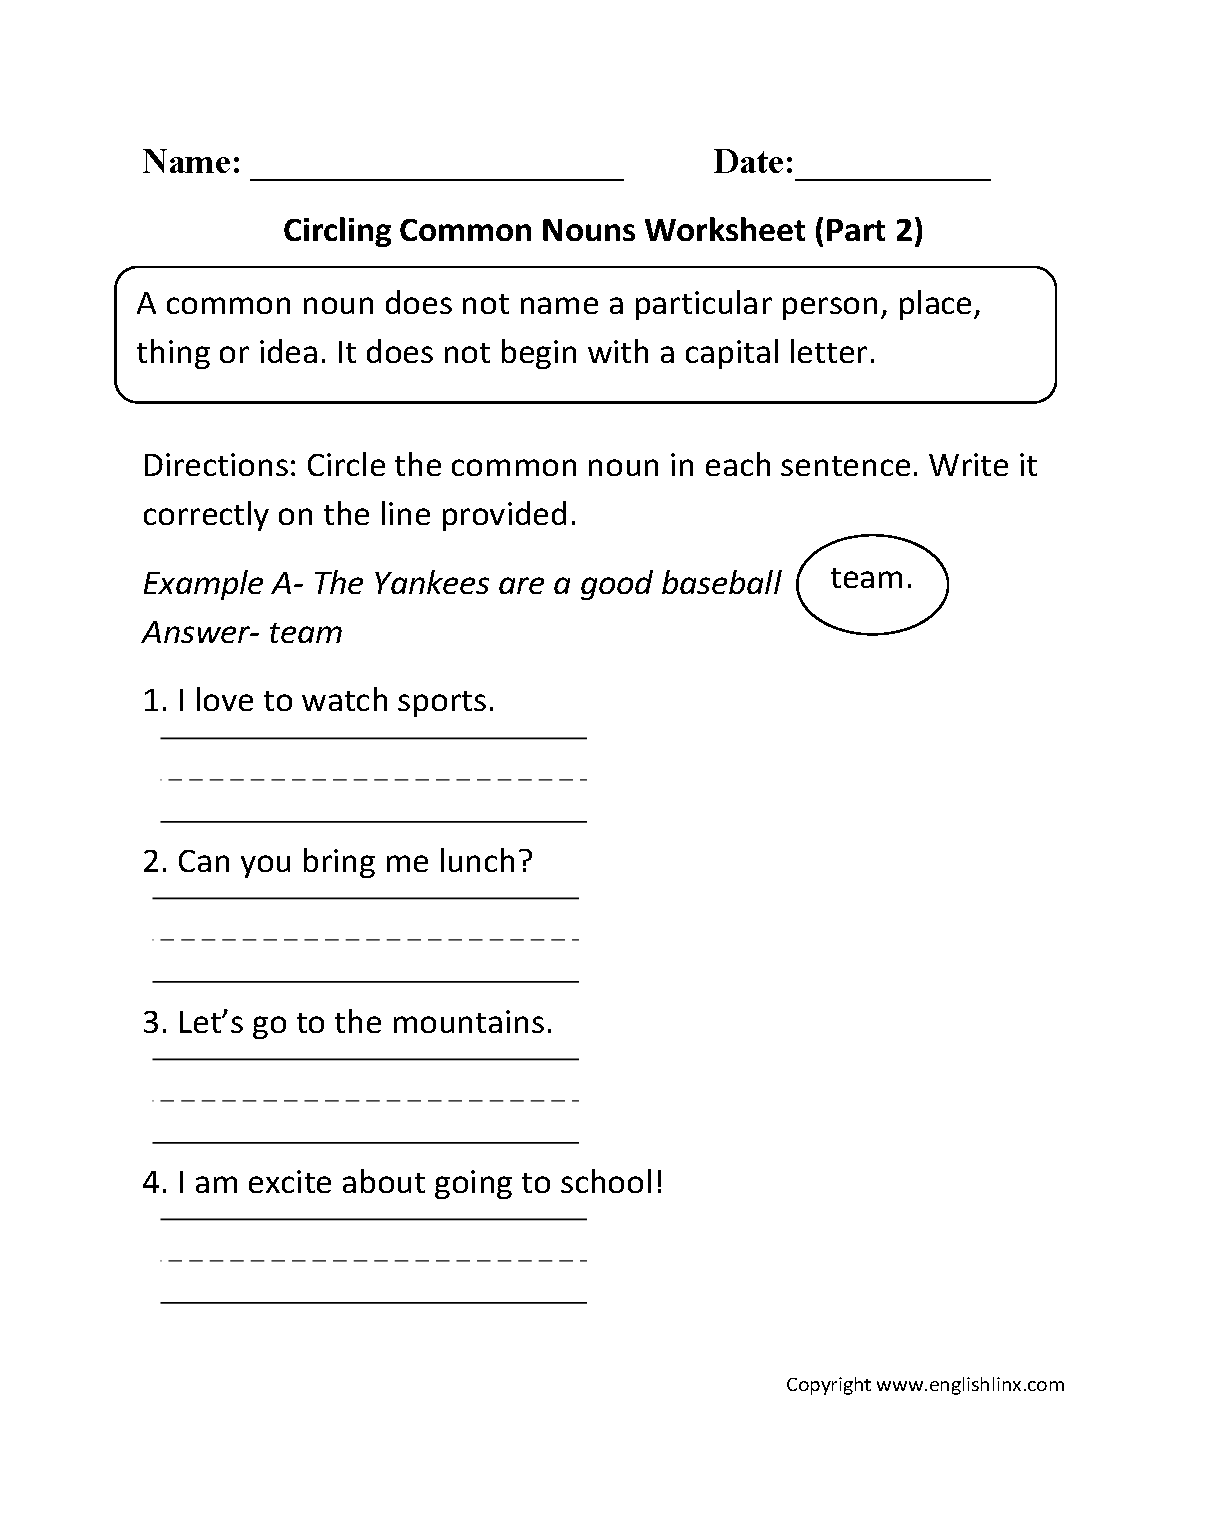 common-and-proper-nouns-worksheets-pdf-worksheets-for-kids